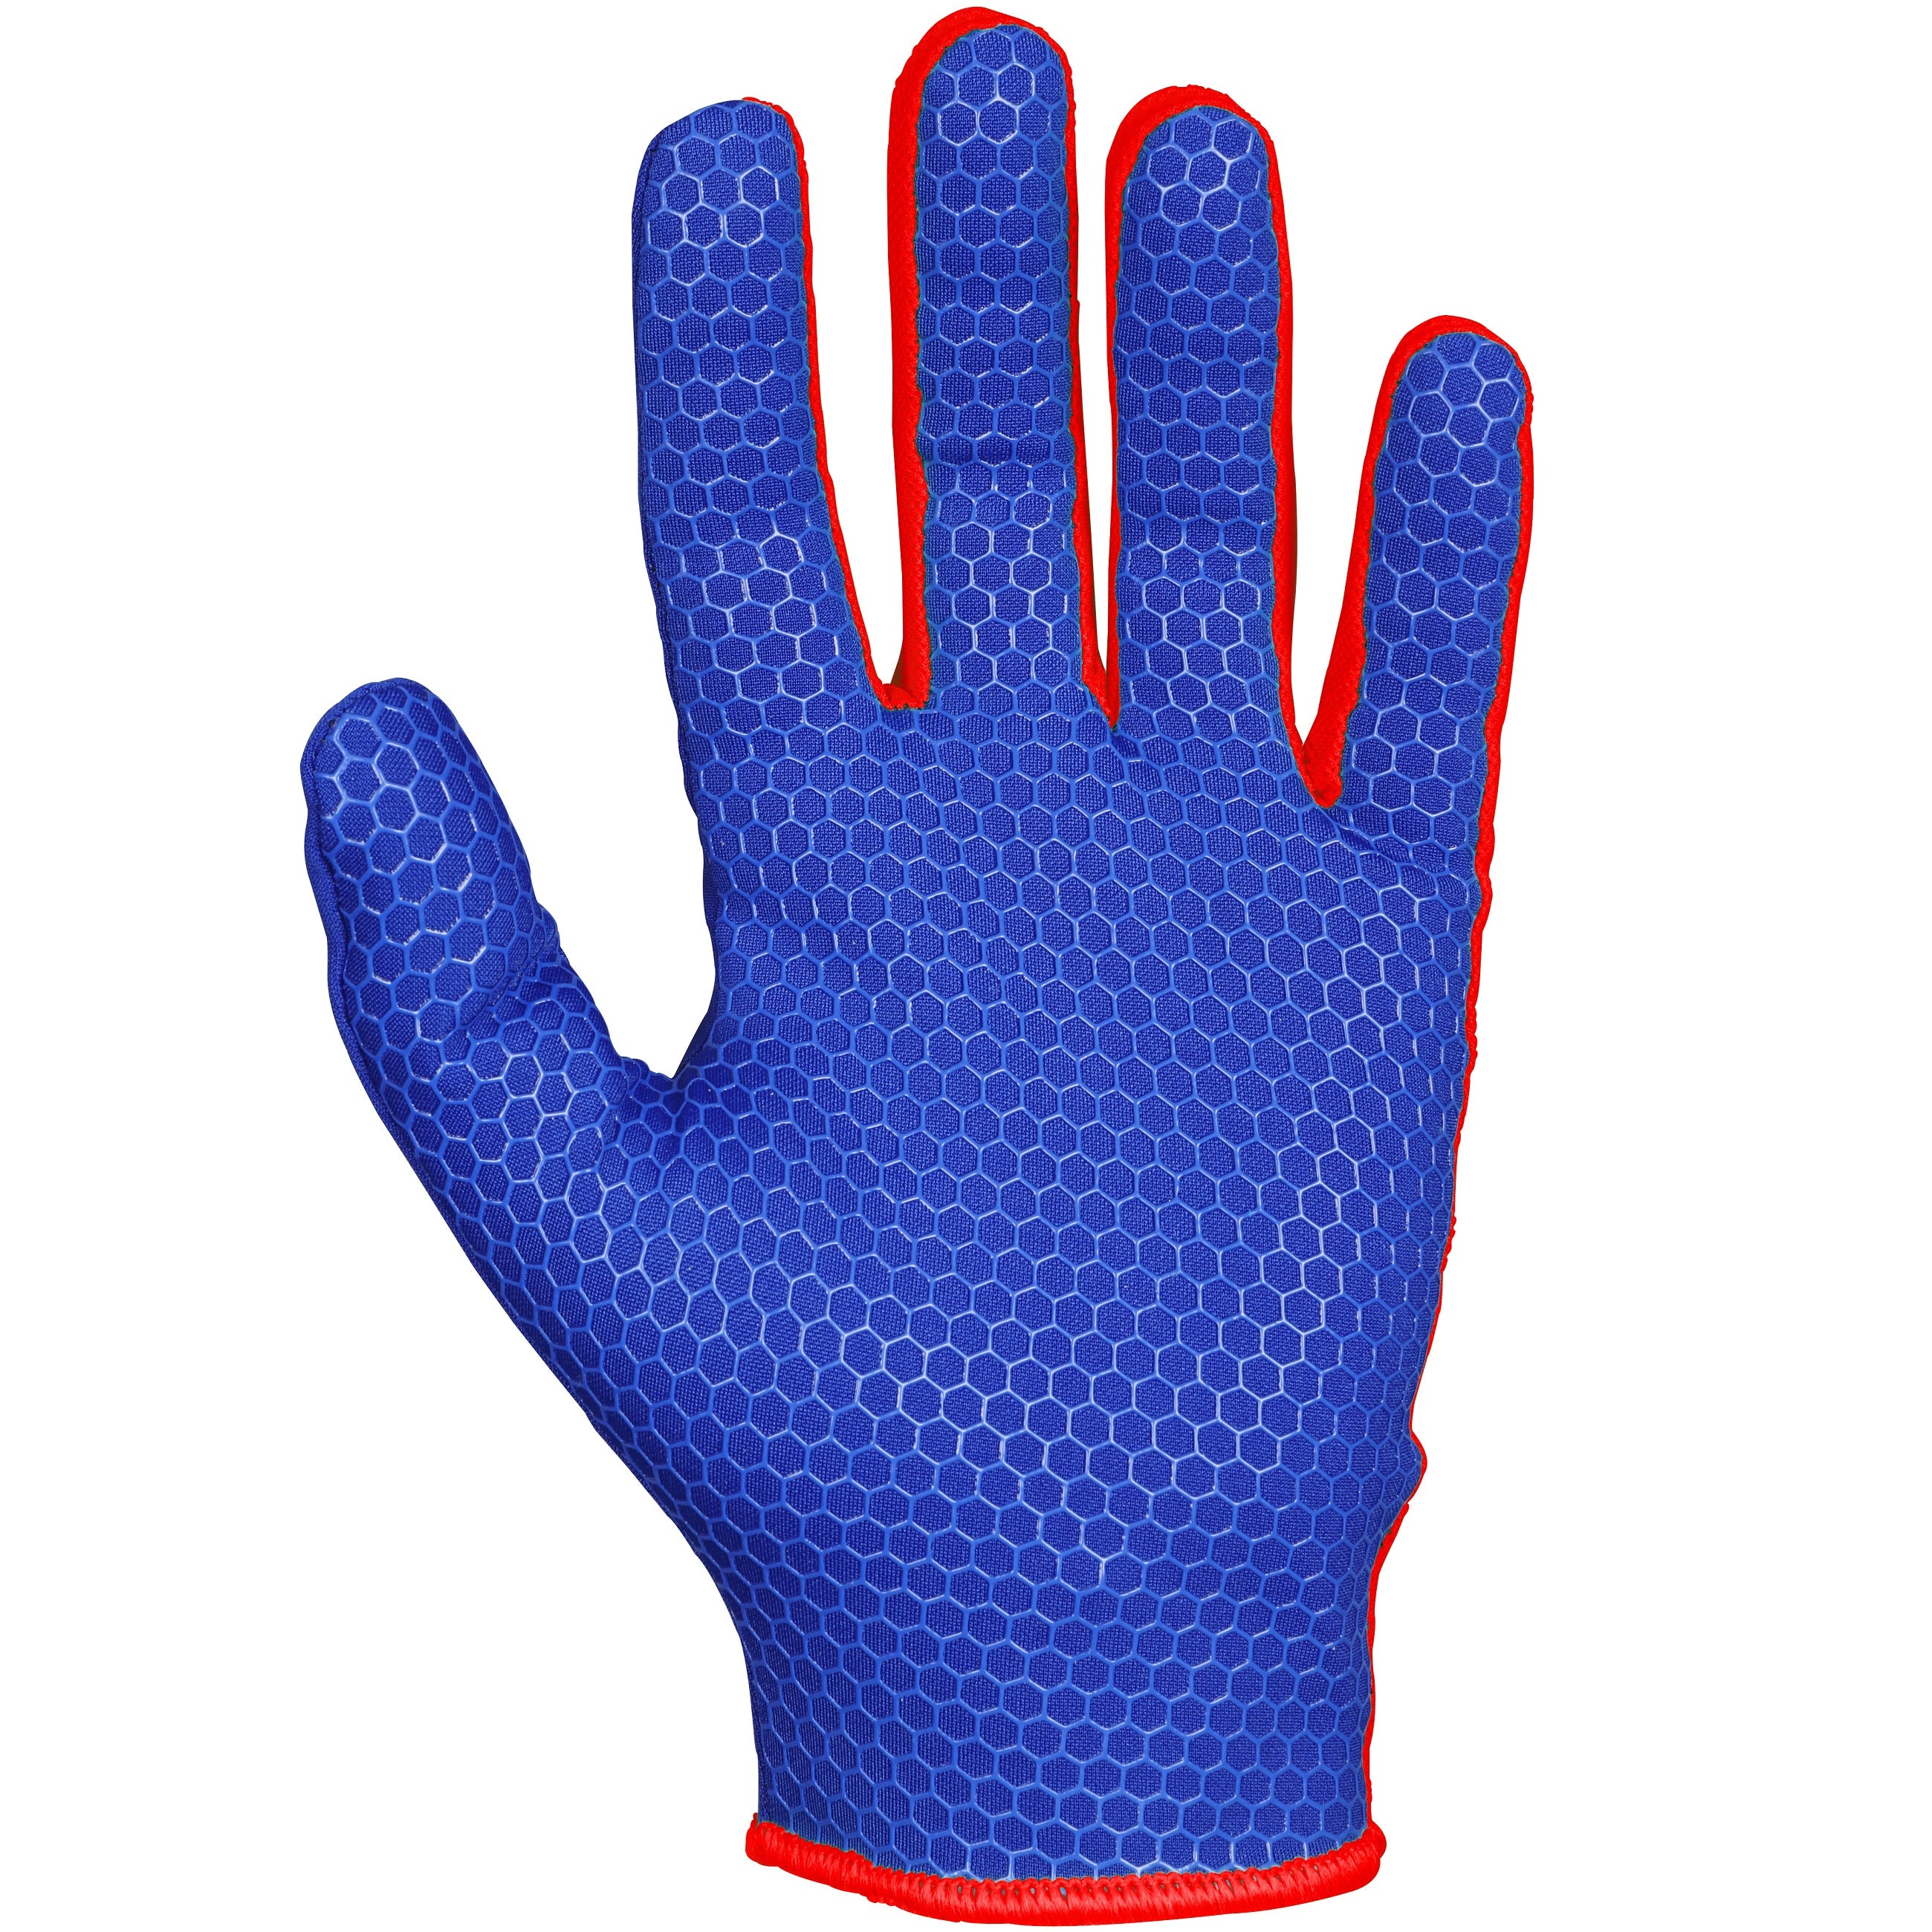 Skinful Pro Gloves